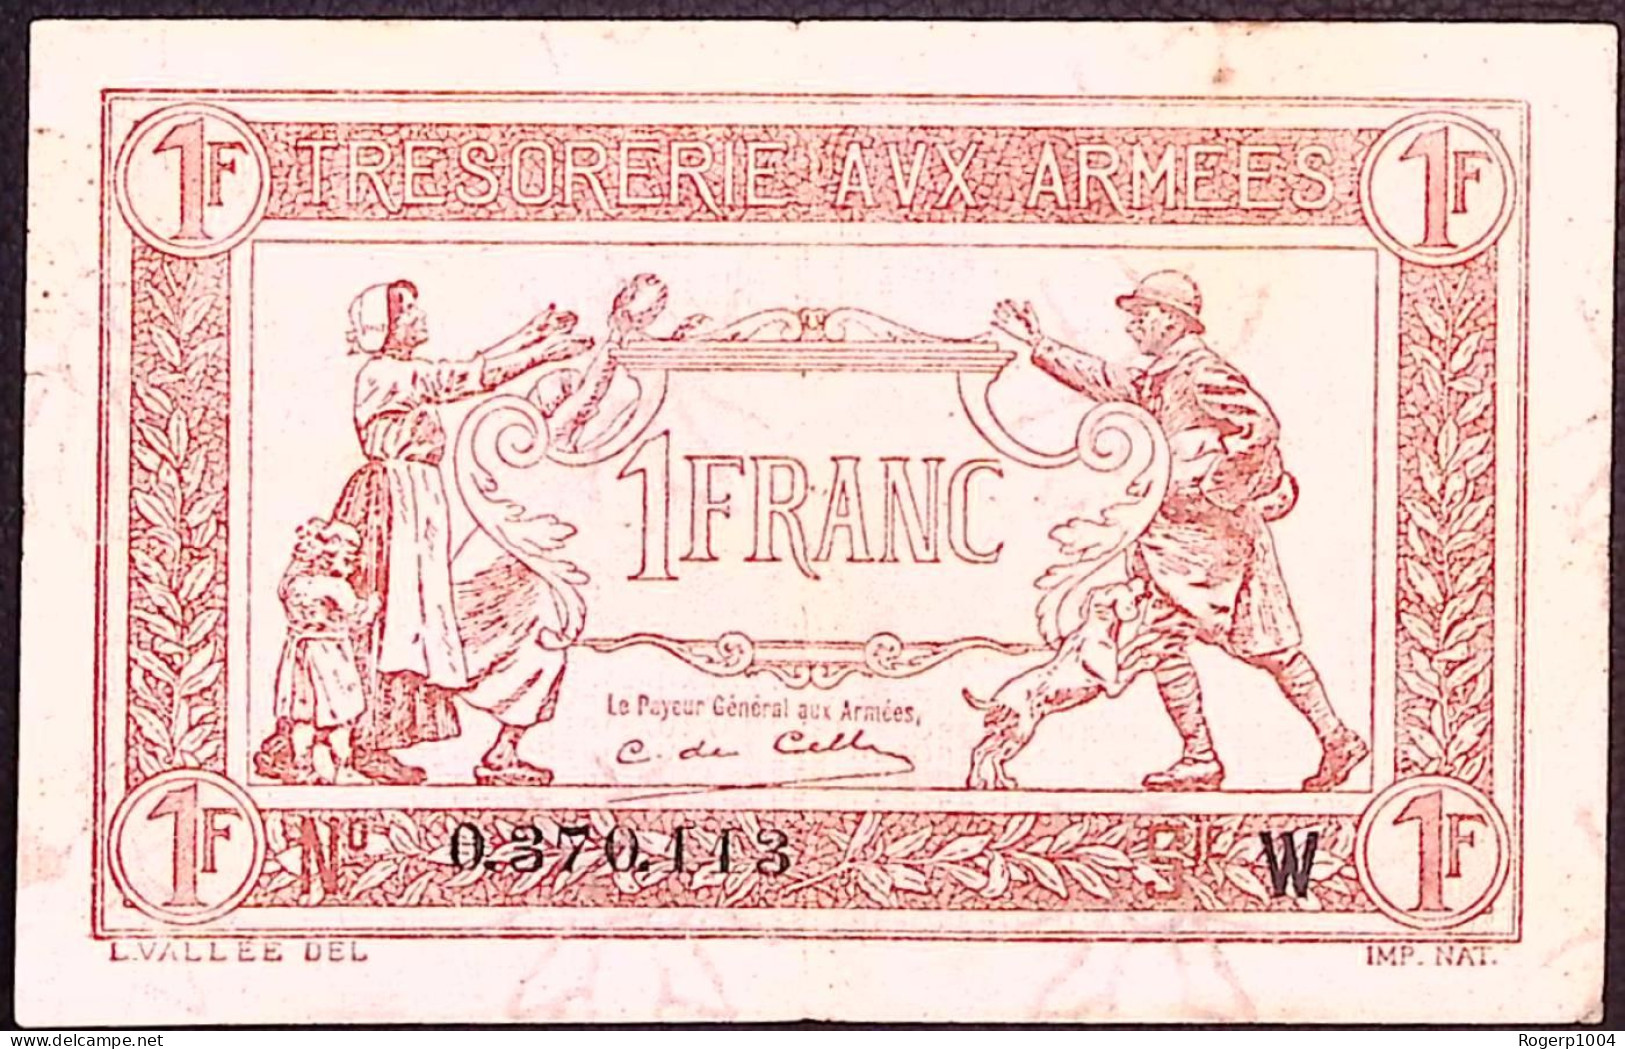 FRANCE * TRESORERIE AUX ARMEES * 1919 * Série W * Fay. VF.04.10 * État/Grade TTB/VF - 1917-1919 Army Treasury